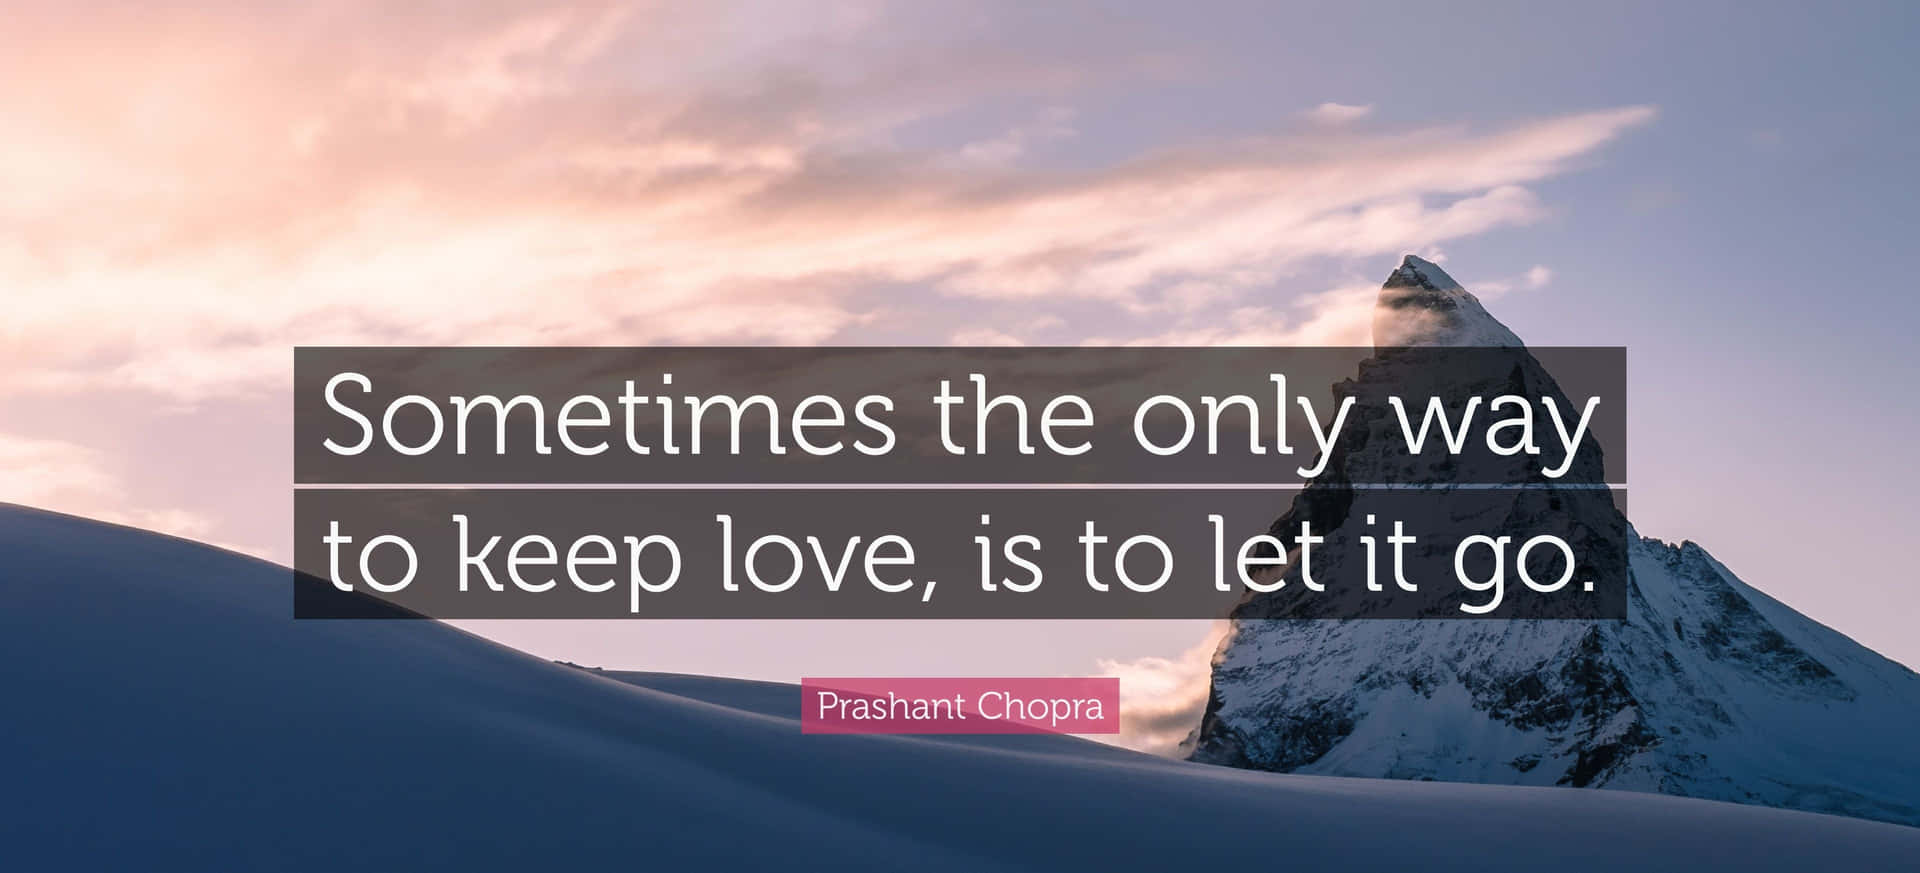 Let It Go Prashant Chopra